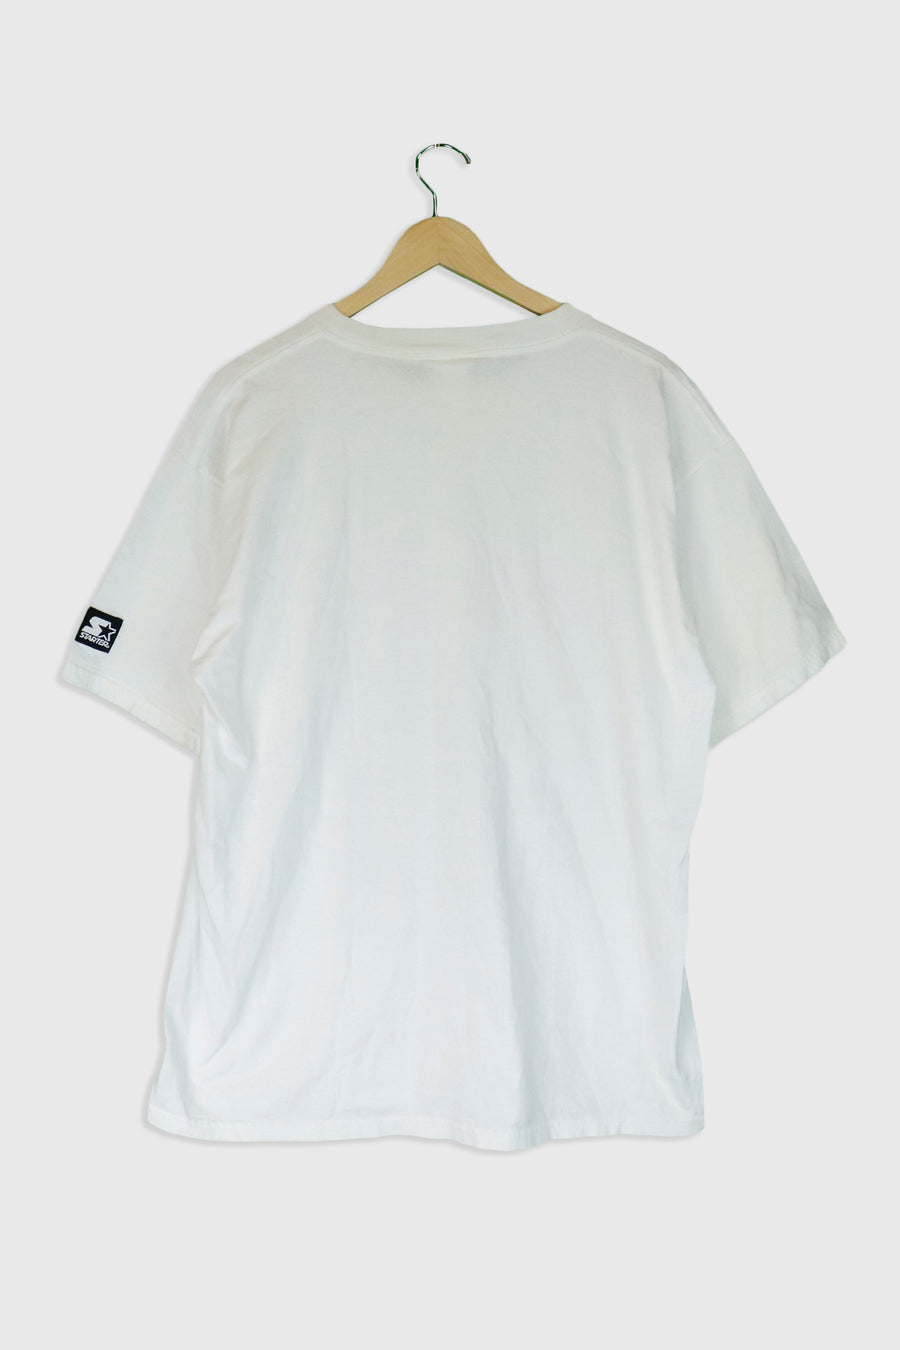 Vintage 1998 Starter NY Yankees Clubhouse T Shirt Sz XL